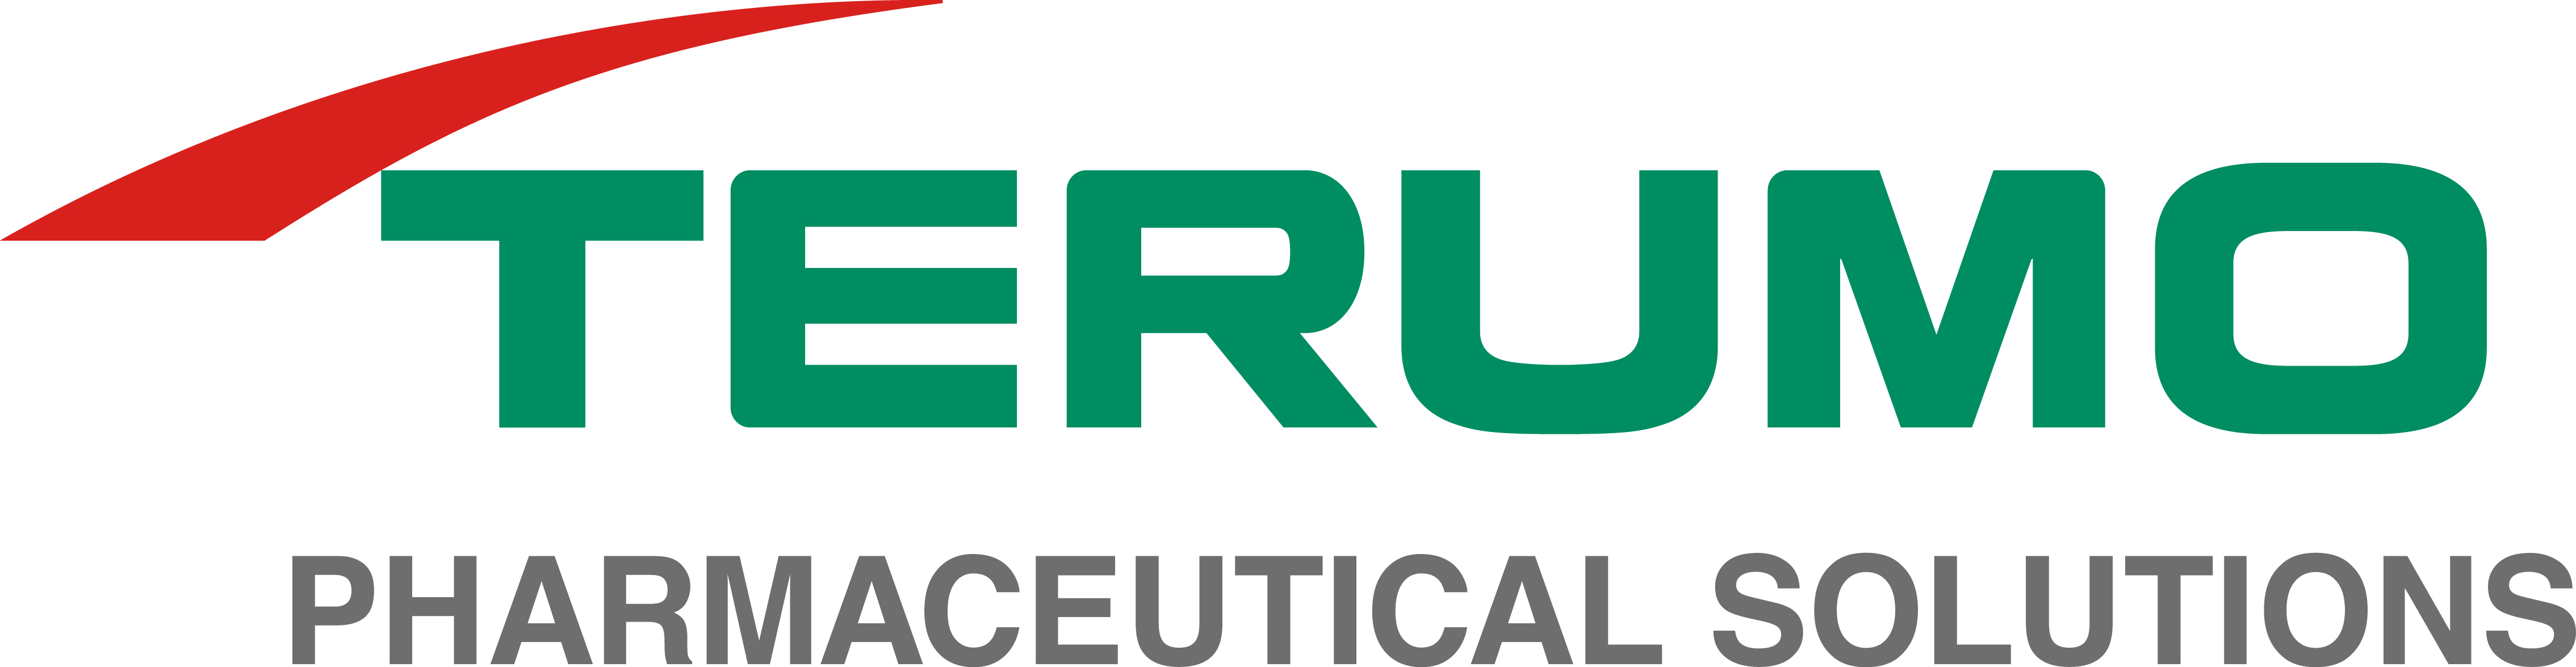 Terumo_Pharmaceutical_solutions_logo_RGB_HR.jpg